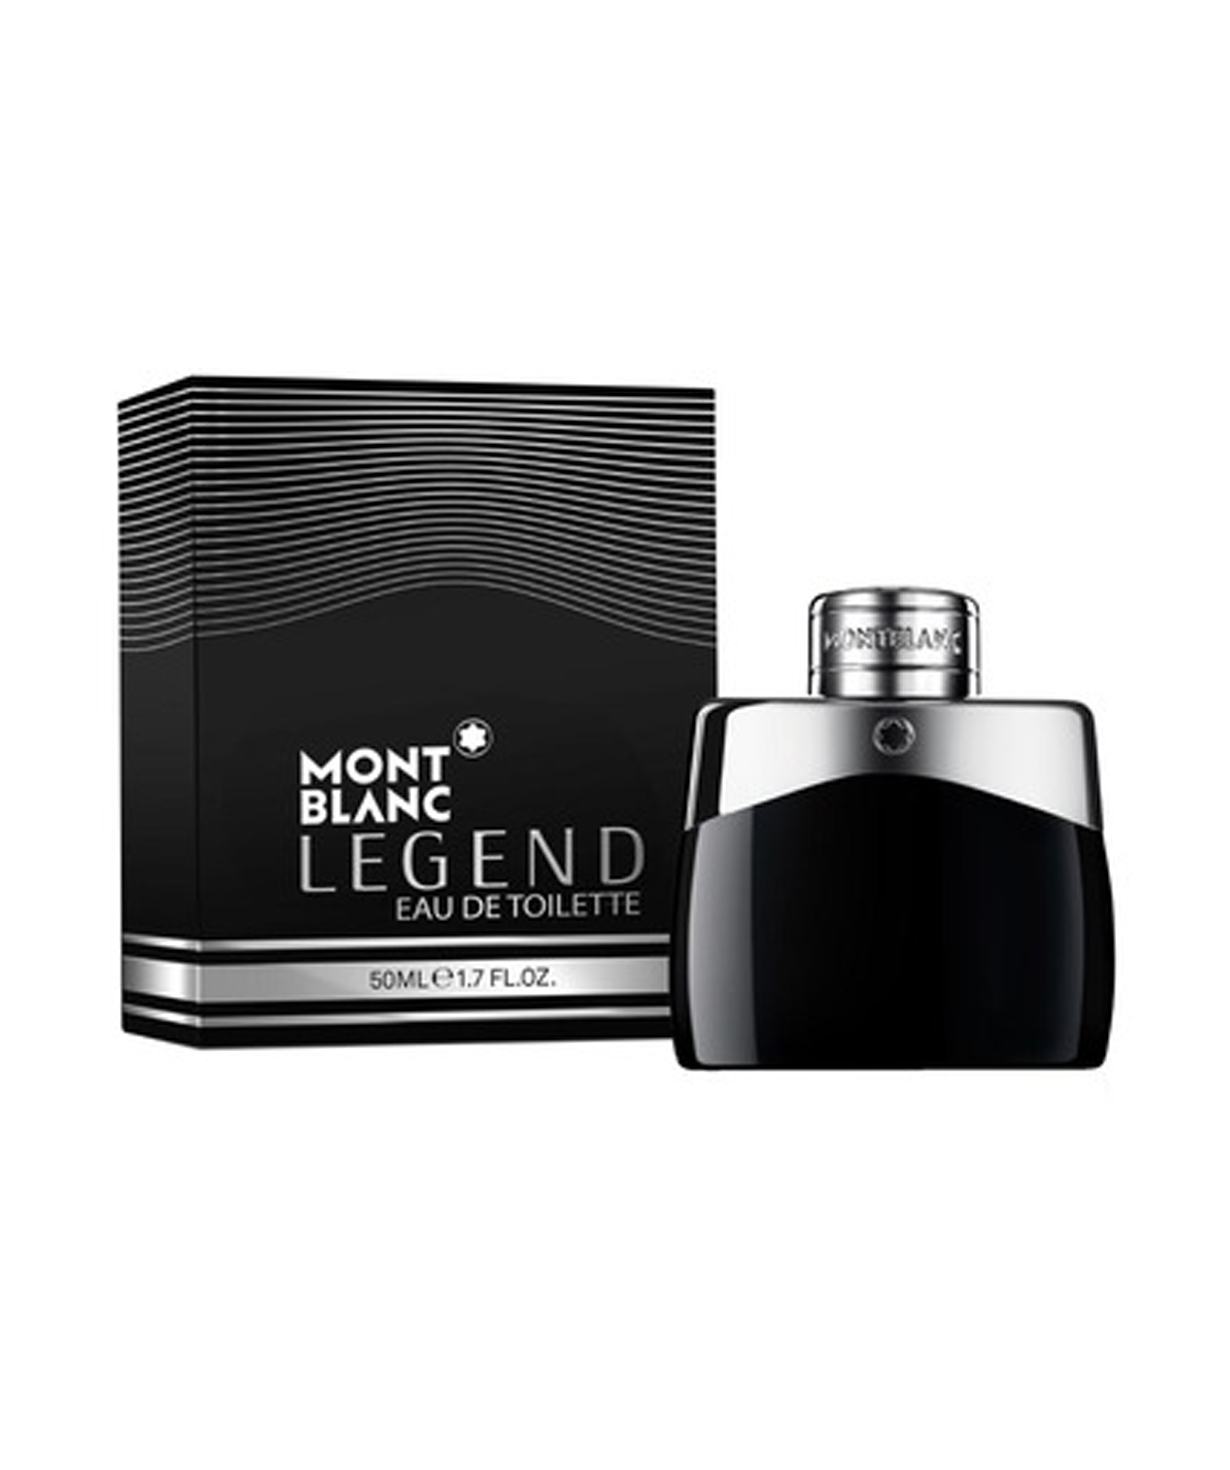 Perfume «Montblanc» Legend EDT, for men, 50 ml